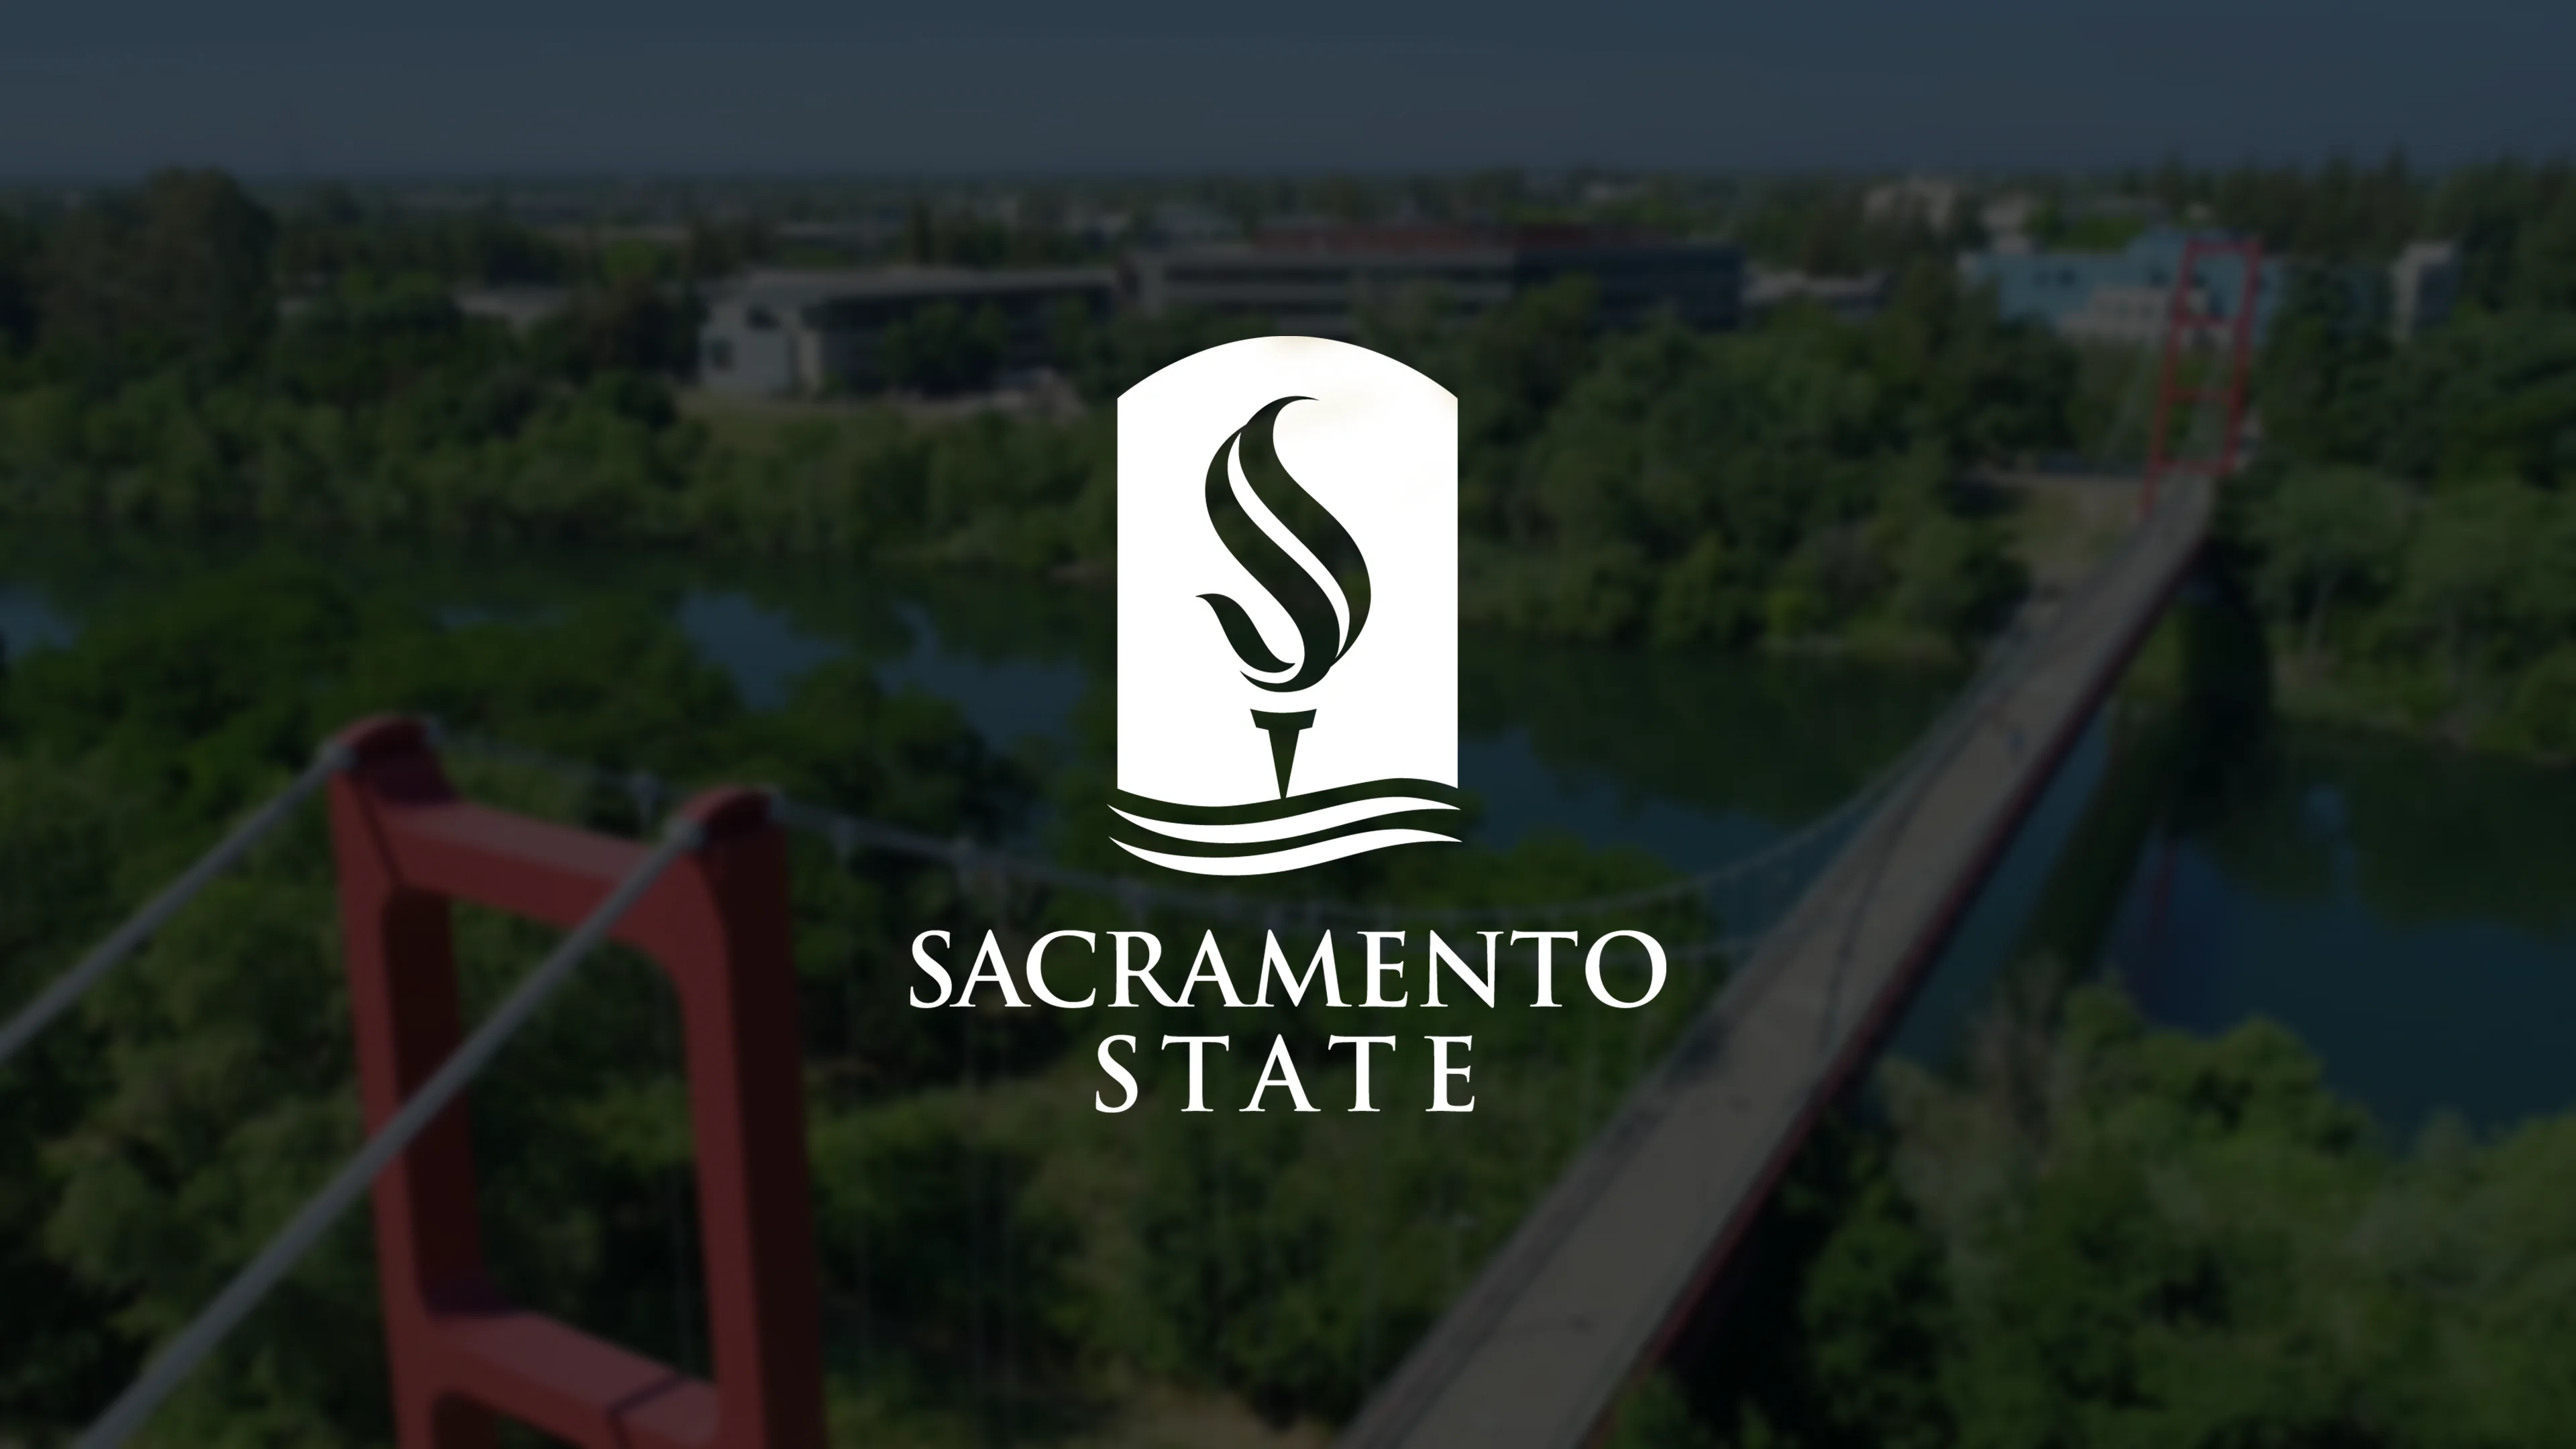 Sacramento State Csu Board Of Trustees Video On Vimeo